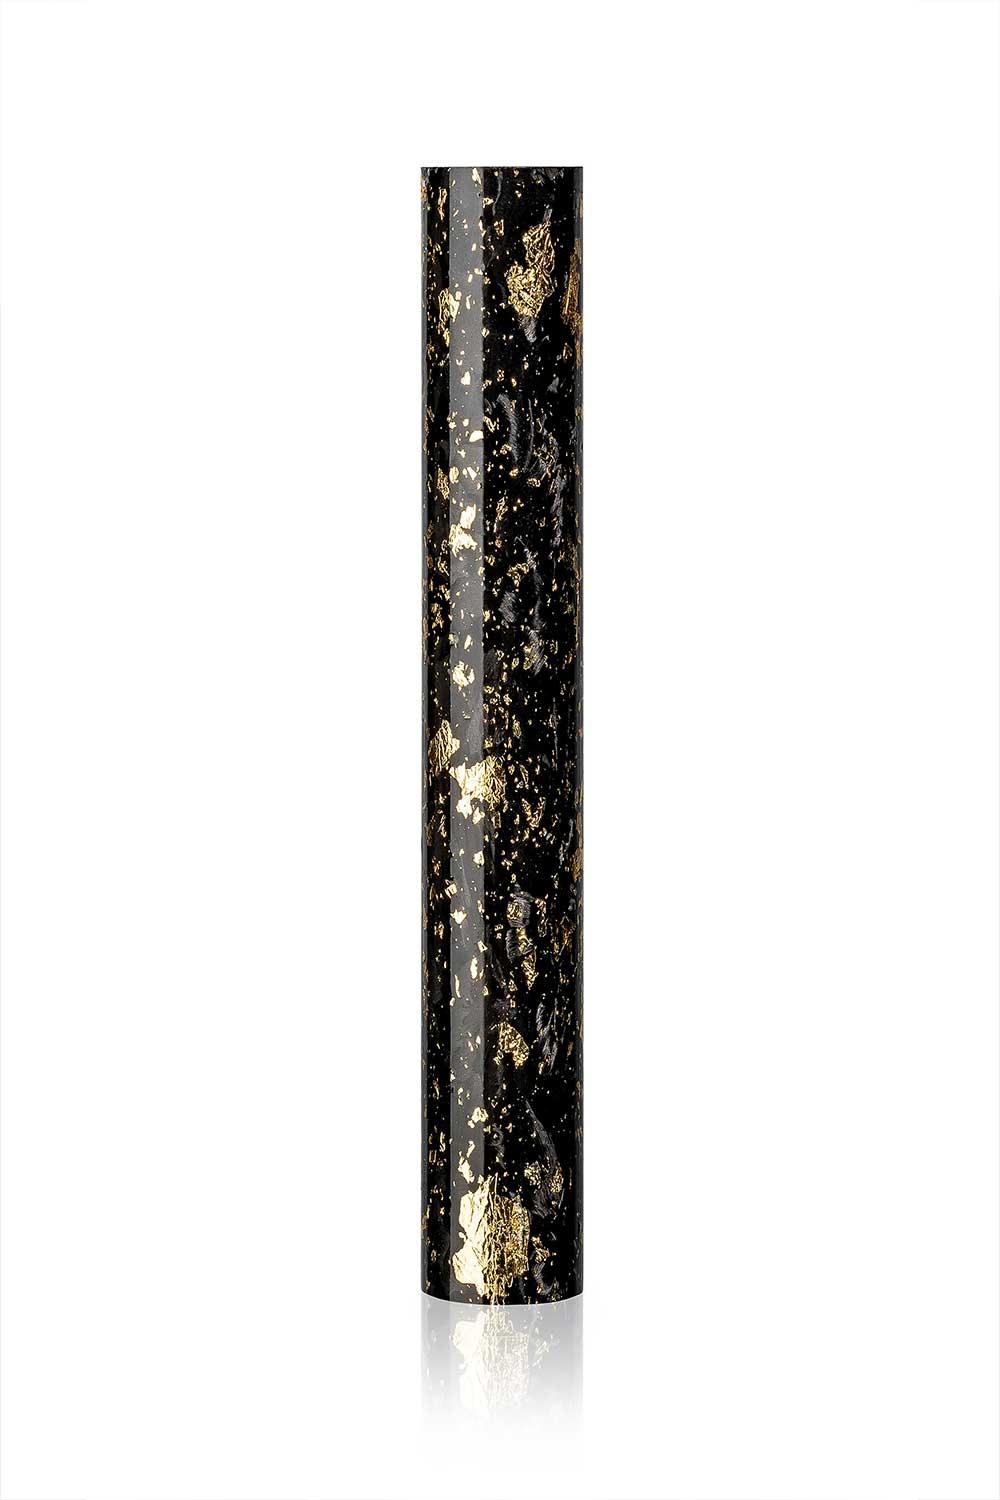 Steamulation Carbon Column Sleeve - Gold Leaf (Big) - shishagear - UK Shisha Hookah Black Friday